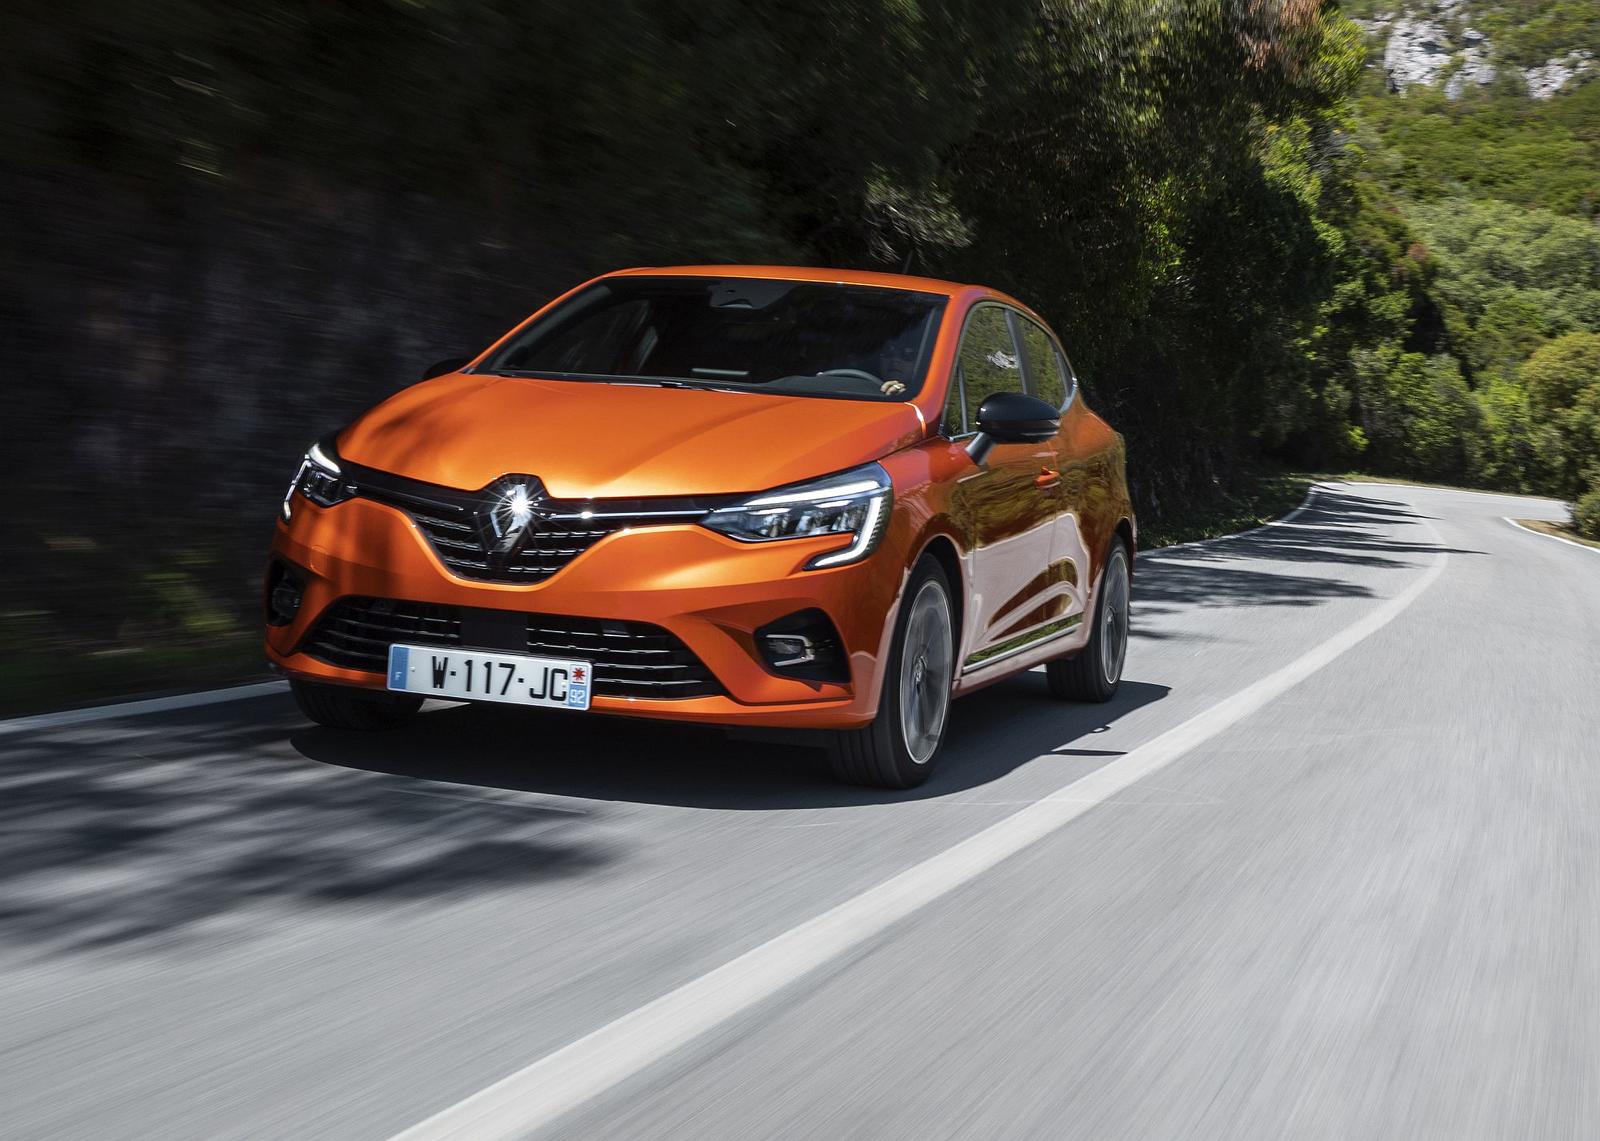 All-new Renault Clio Intens – Orange Valencia (10)